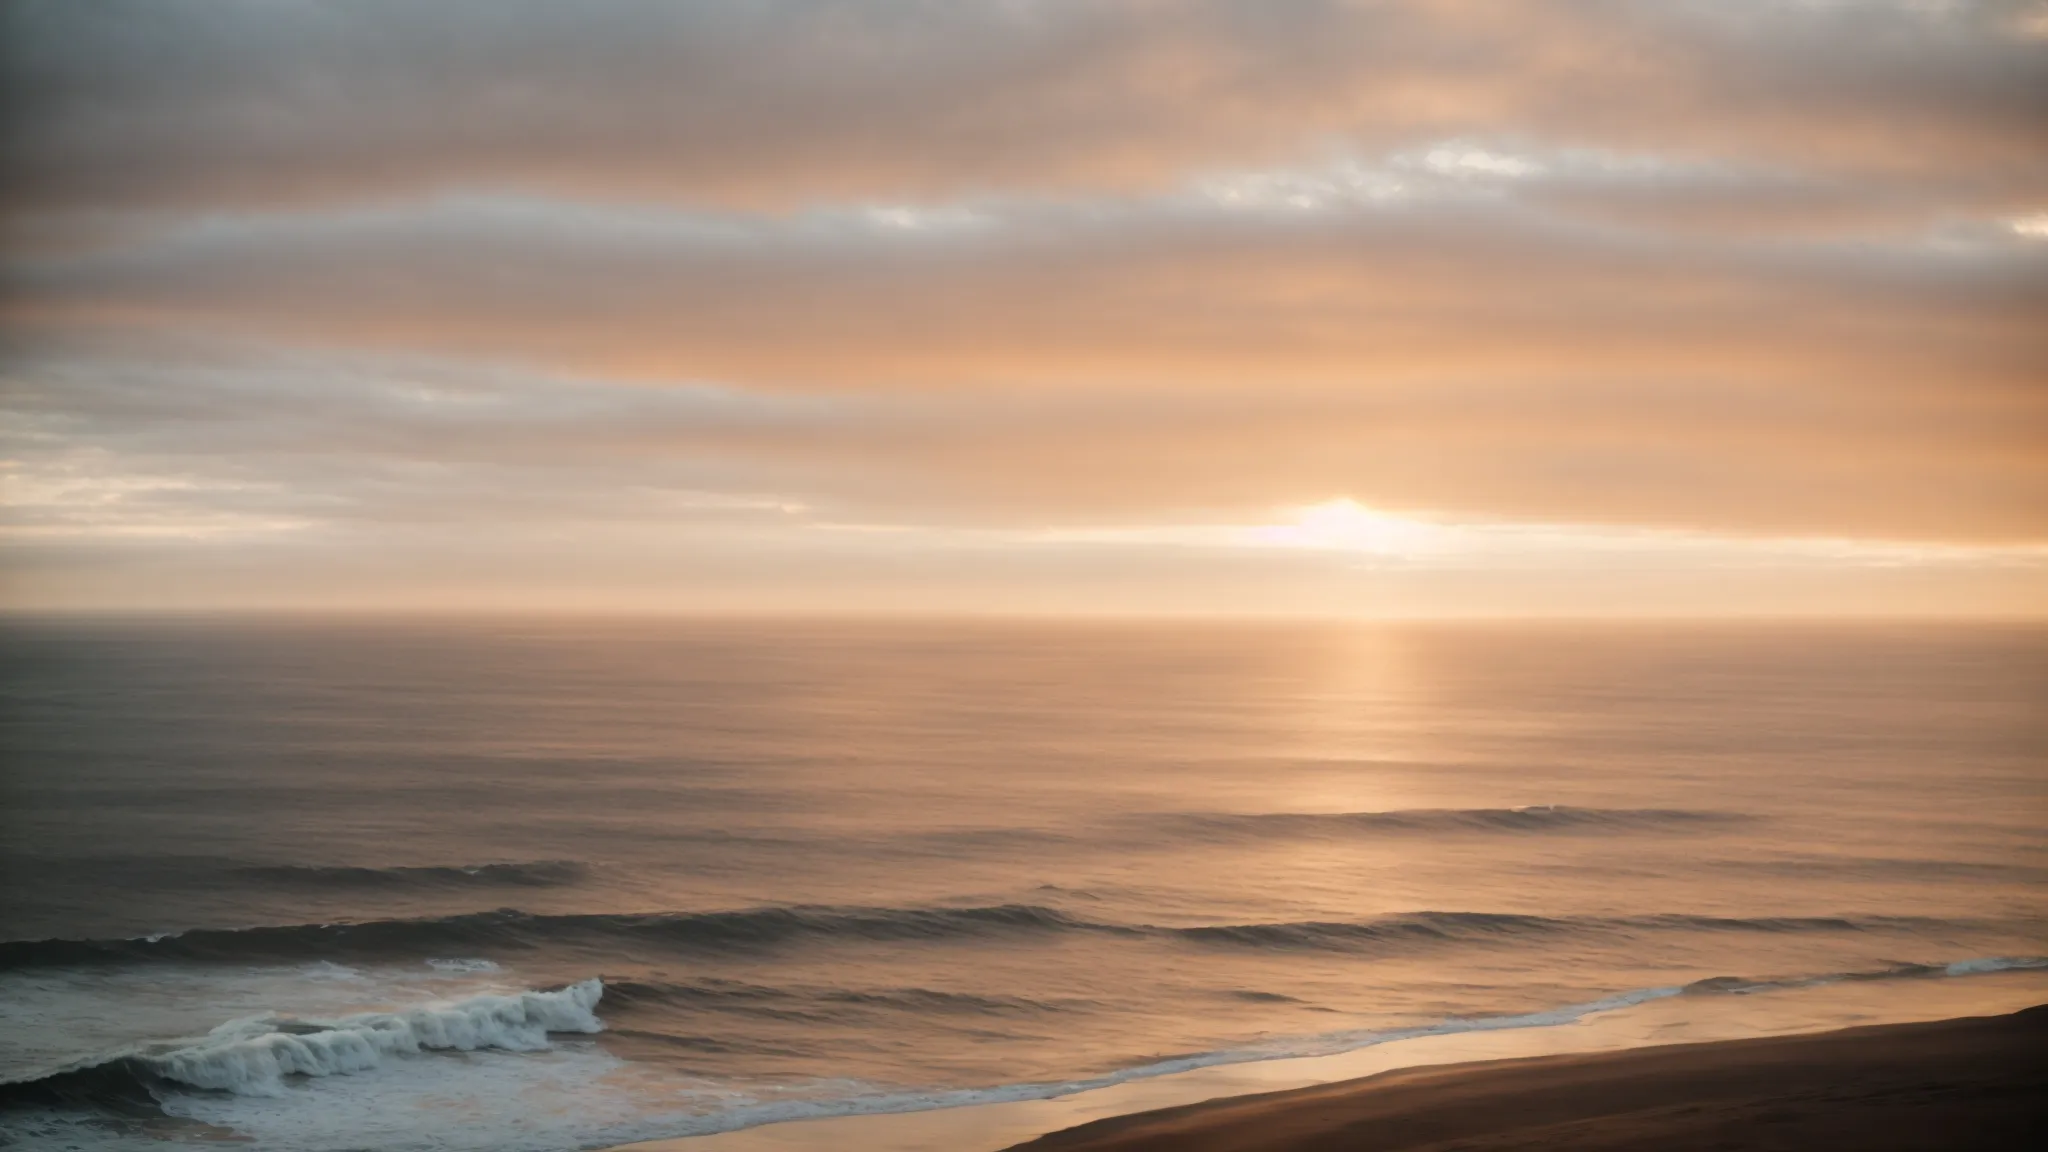 a camera points towards a vast ocean at sunrise, symbolizing new beginnings.